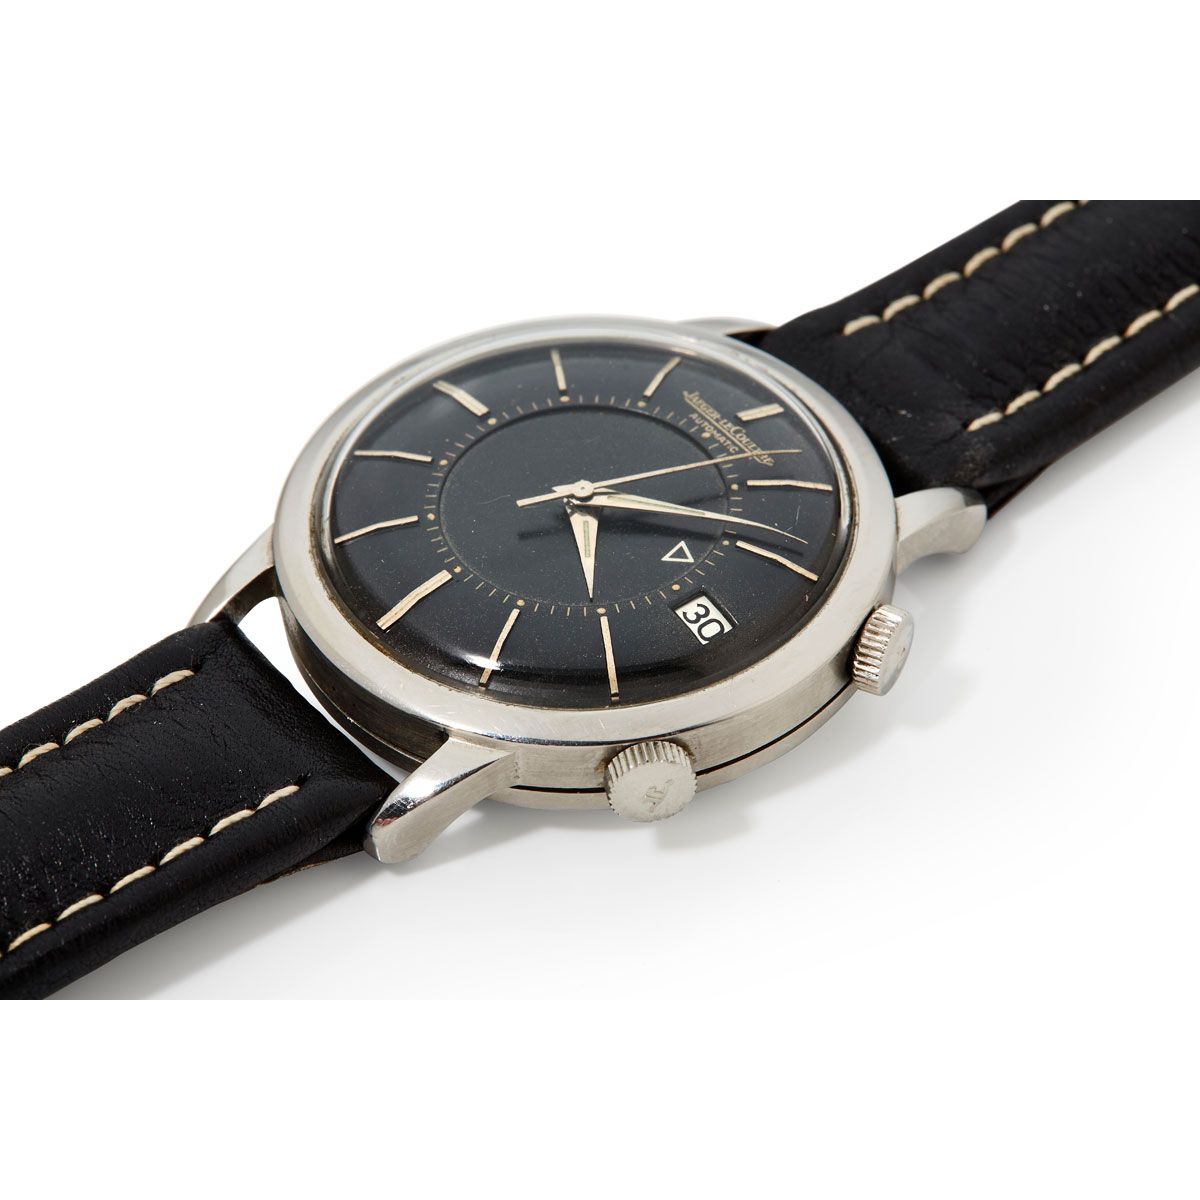 Null Jaeger-LeCoultre, Memovox, n° 845201, vers 1960.

Une belle montre bracelet&hellip;